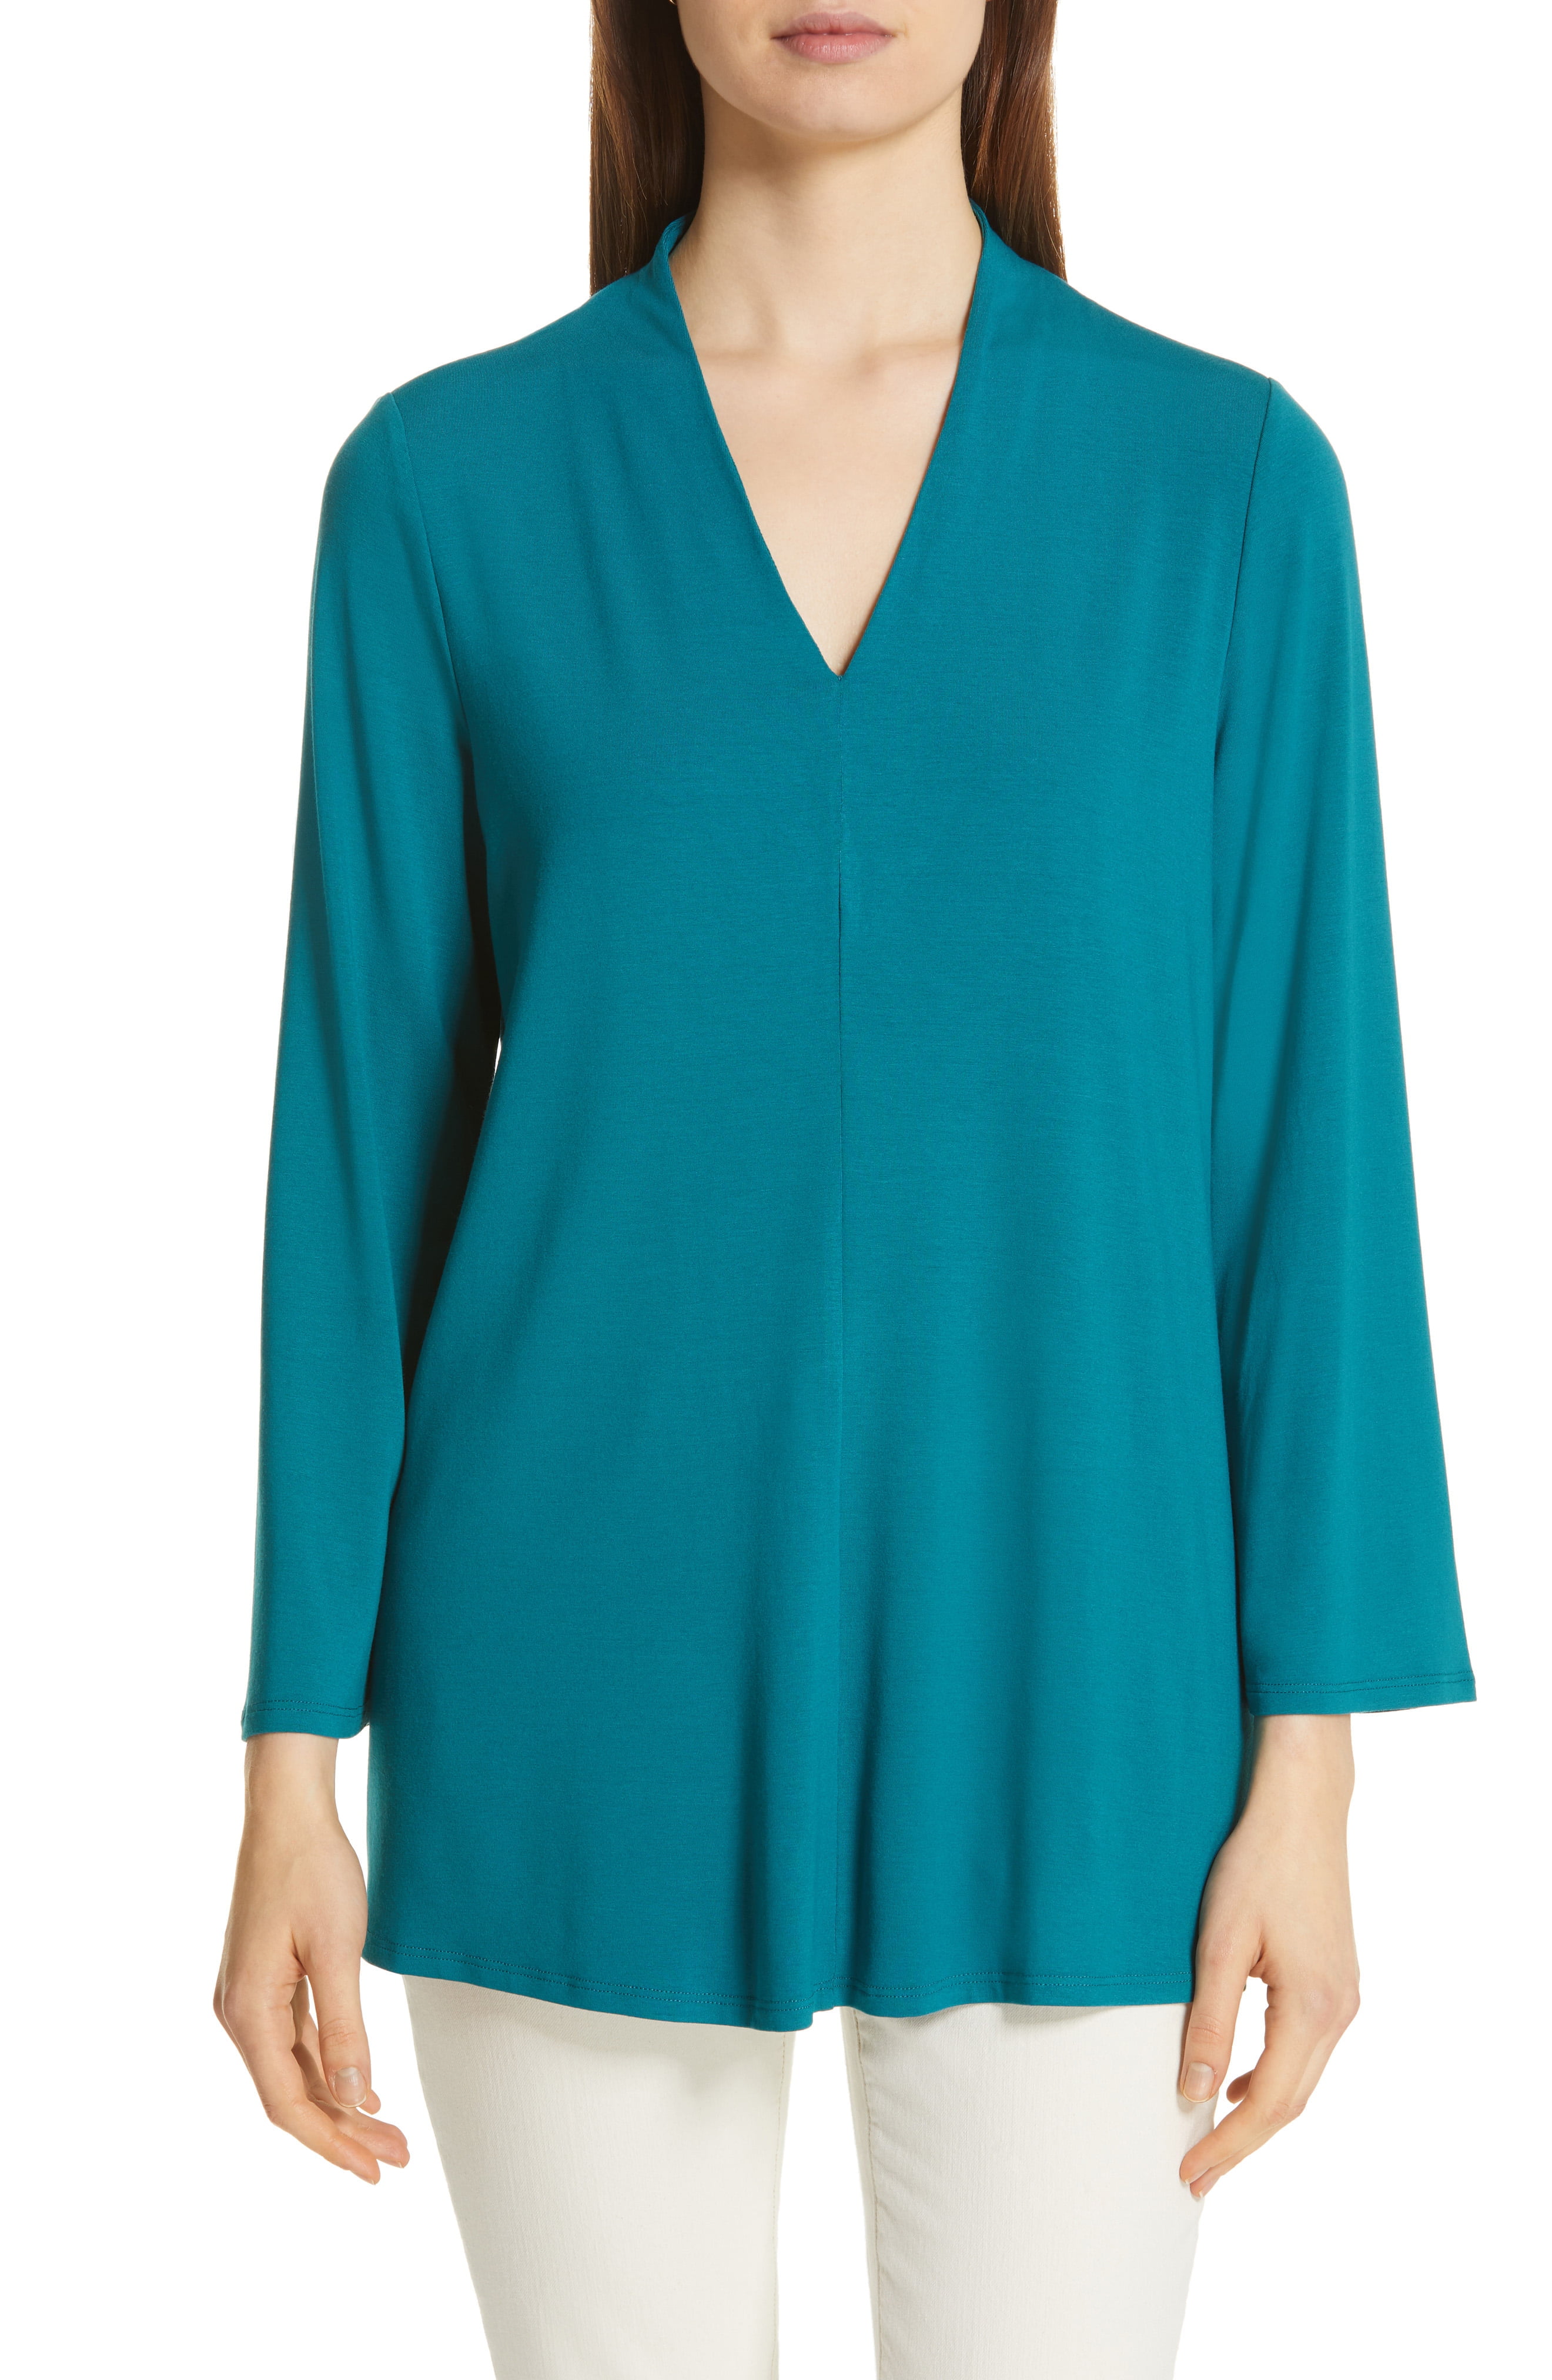 Eileen Fisher - Womens Blouse Teal V-Neck Jersey Tunic XL - Walmart.com ...